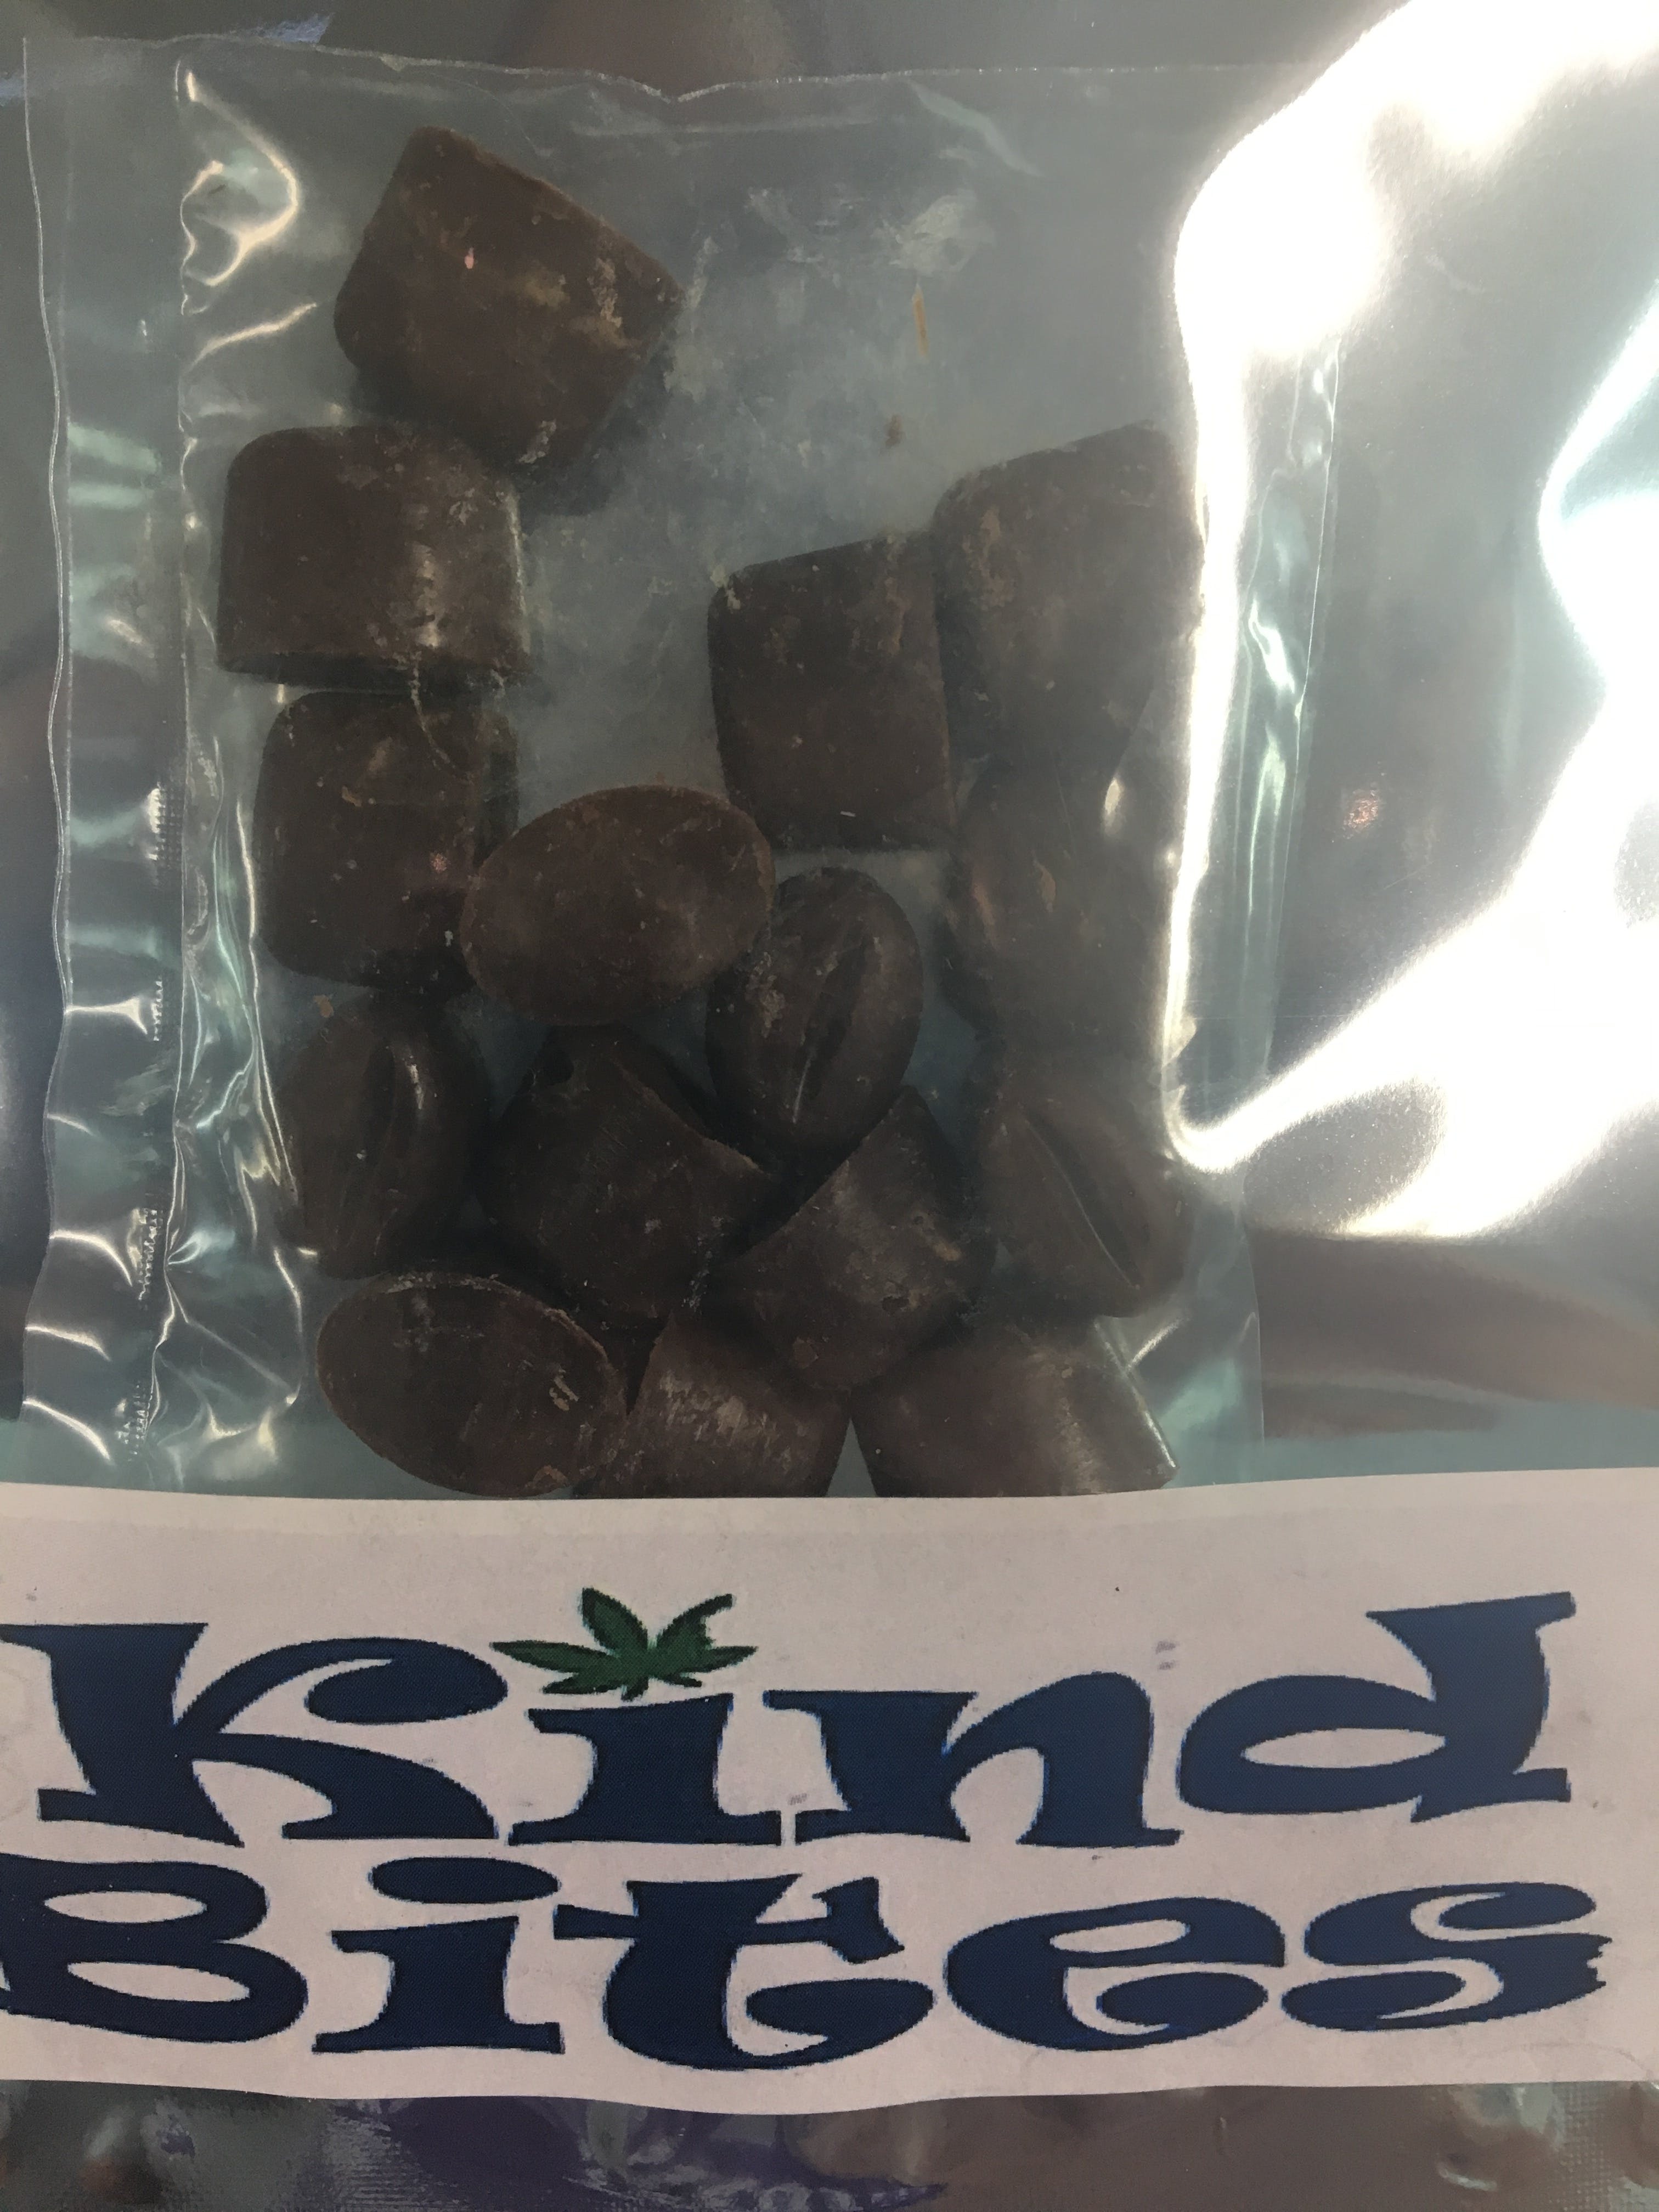 edible-45-mg-chocolate-covered-coffee-beans